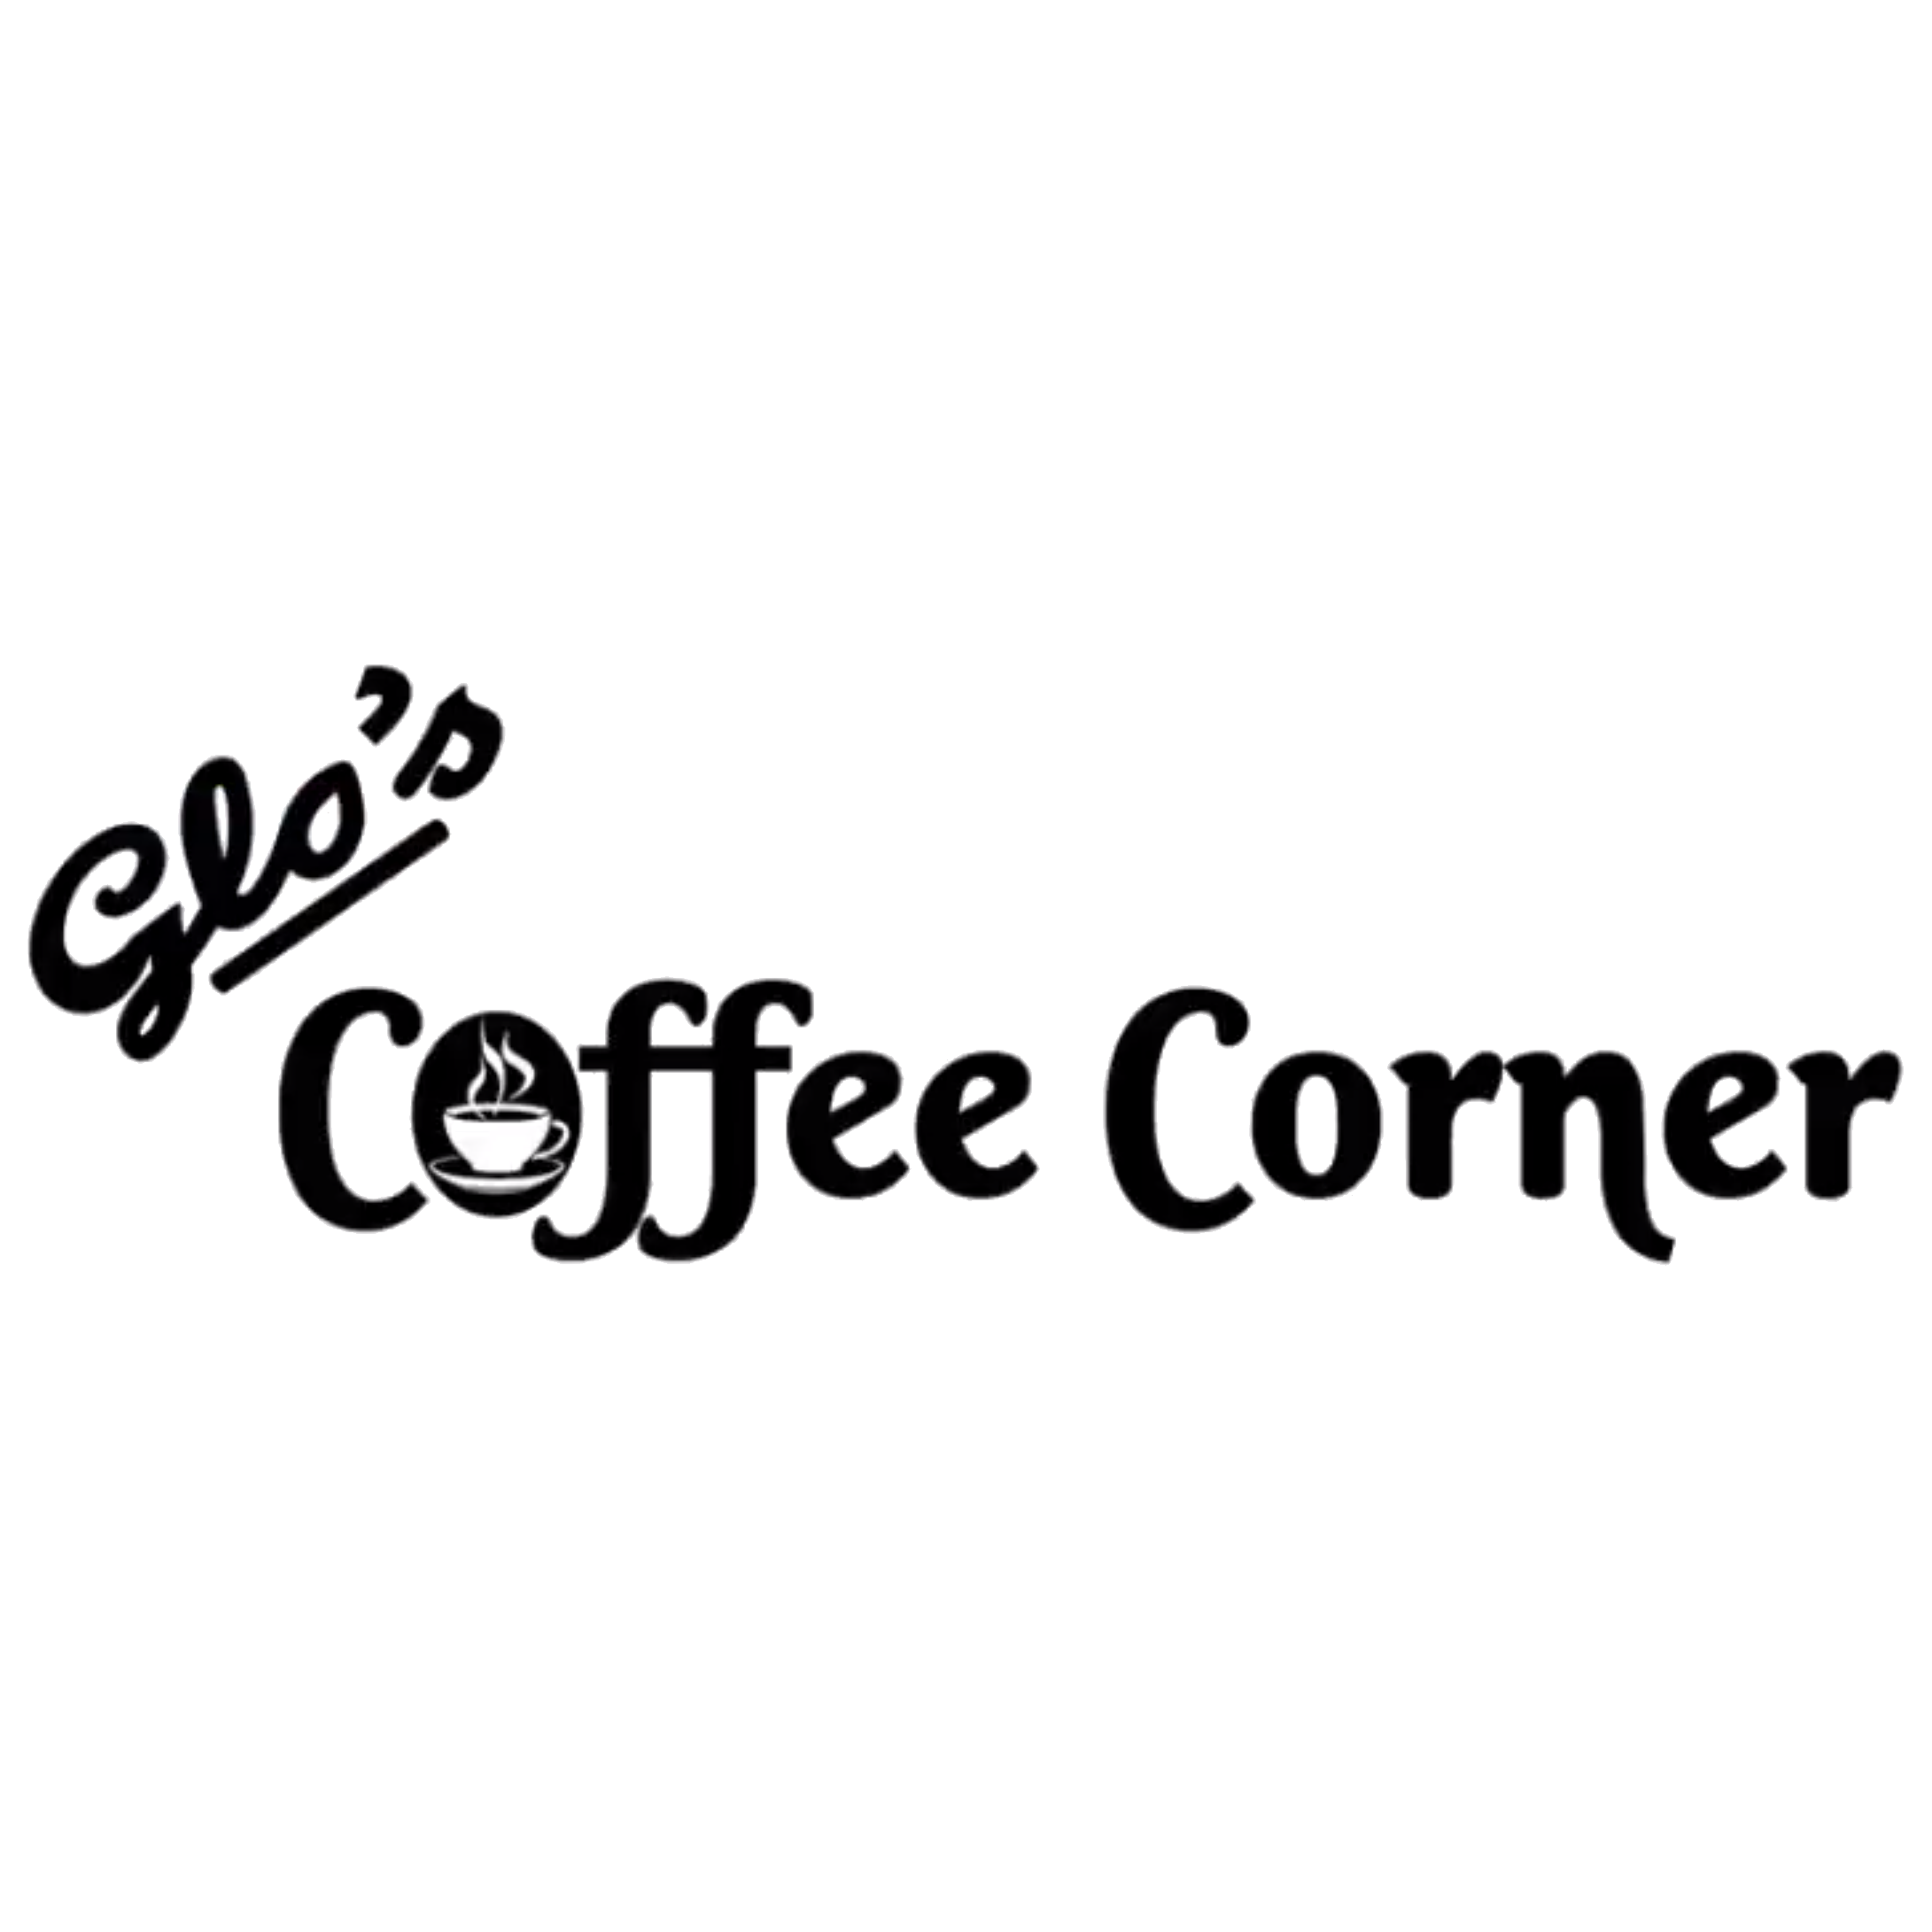 Glo's Coffee Corner Photo